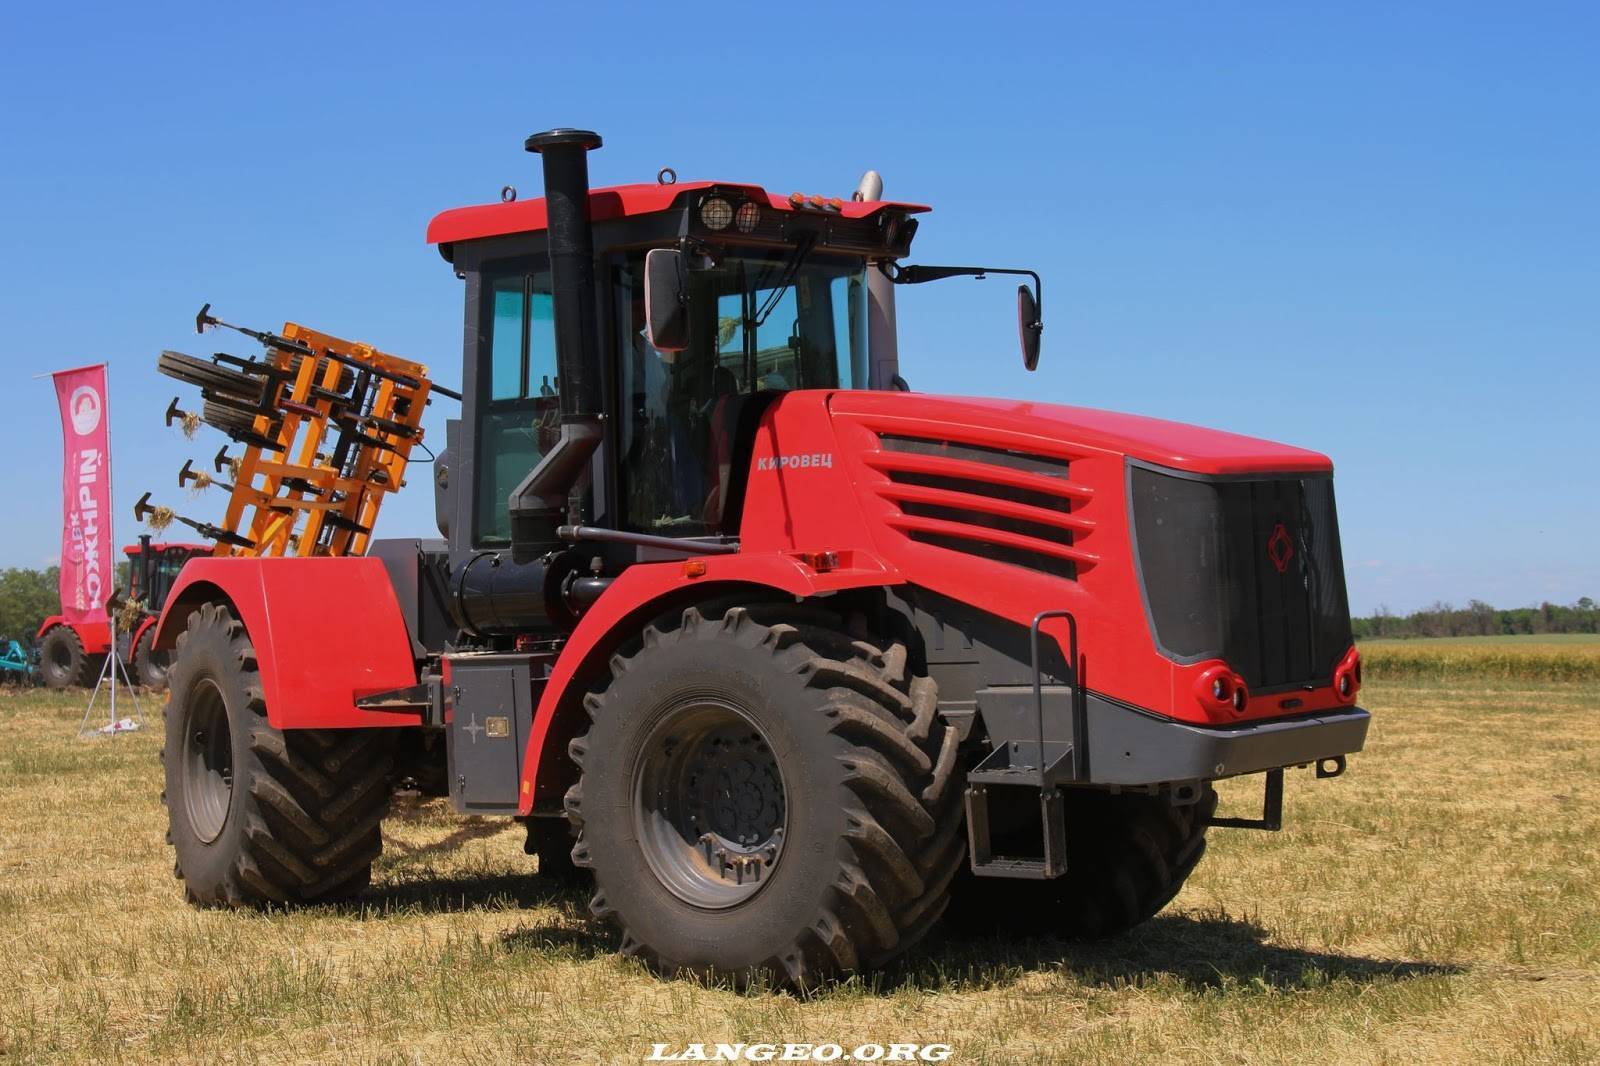 Трактор к-9000 «кировец»: технические характеристики, фото